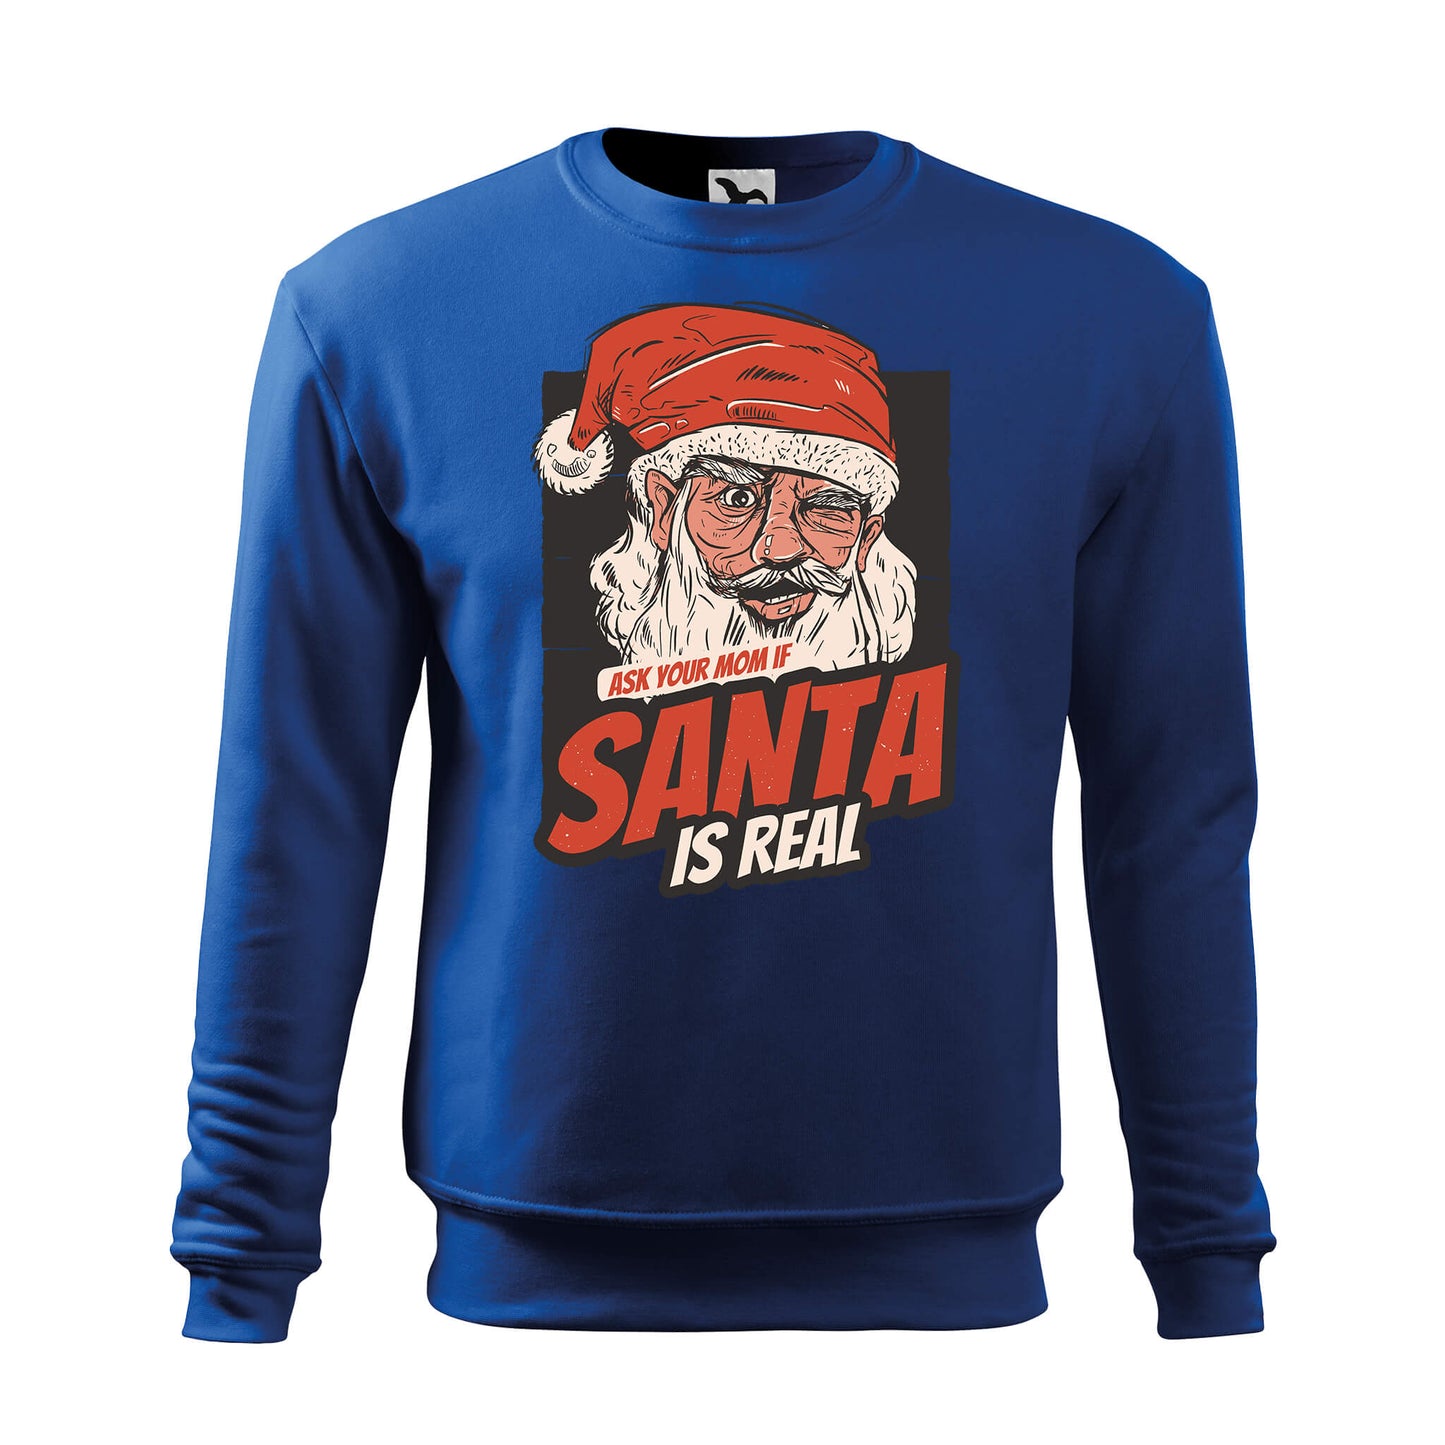 Ask your mom if santa is real sweatshirt - rvdesignprint